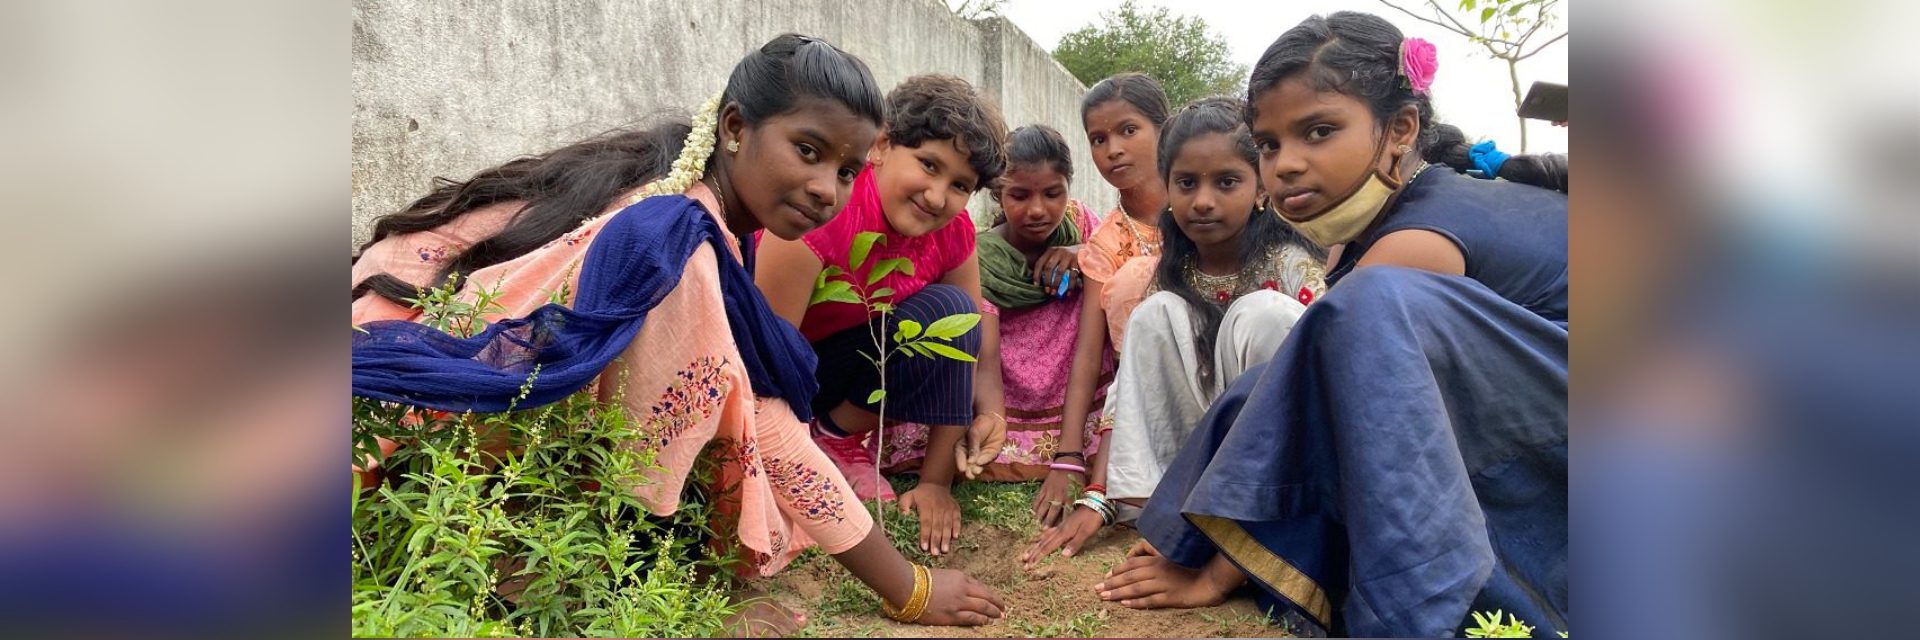 Prasiddhi Singh - သစ်သီးသစ်တော ၁၉ ခုကို ပြုစုပျိုးထောင်ပေးခဲ့တဲ့ အသက် ၉ နှစ်အရွယ် သဘာဝပတ်ဝန်းကျင် ပညာရှင်